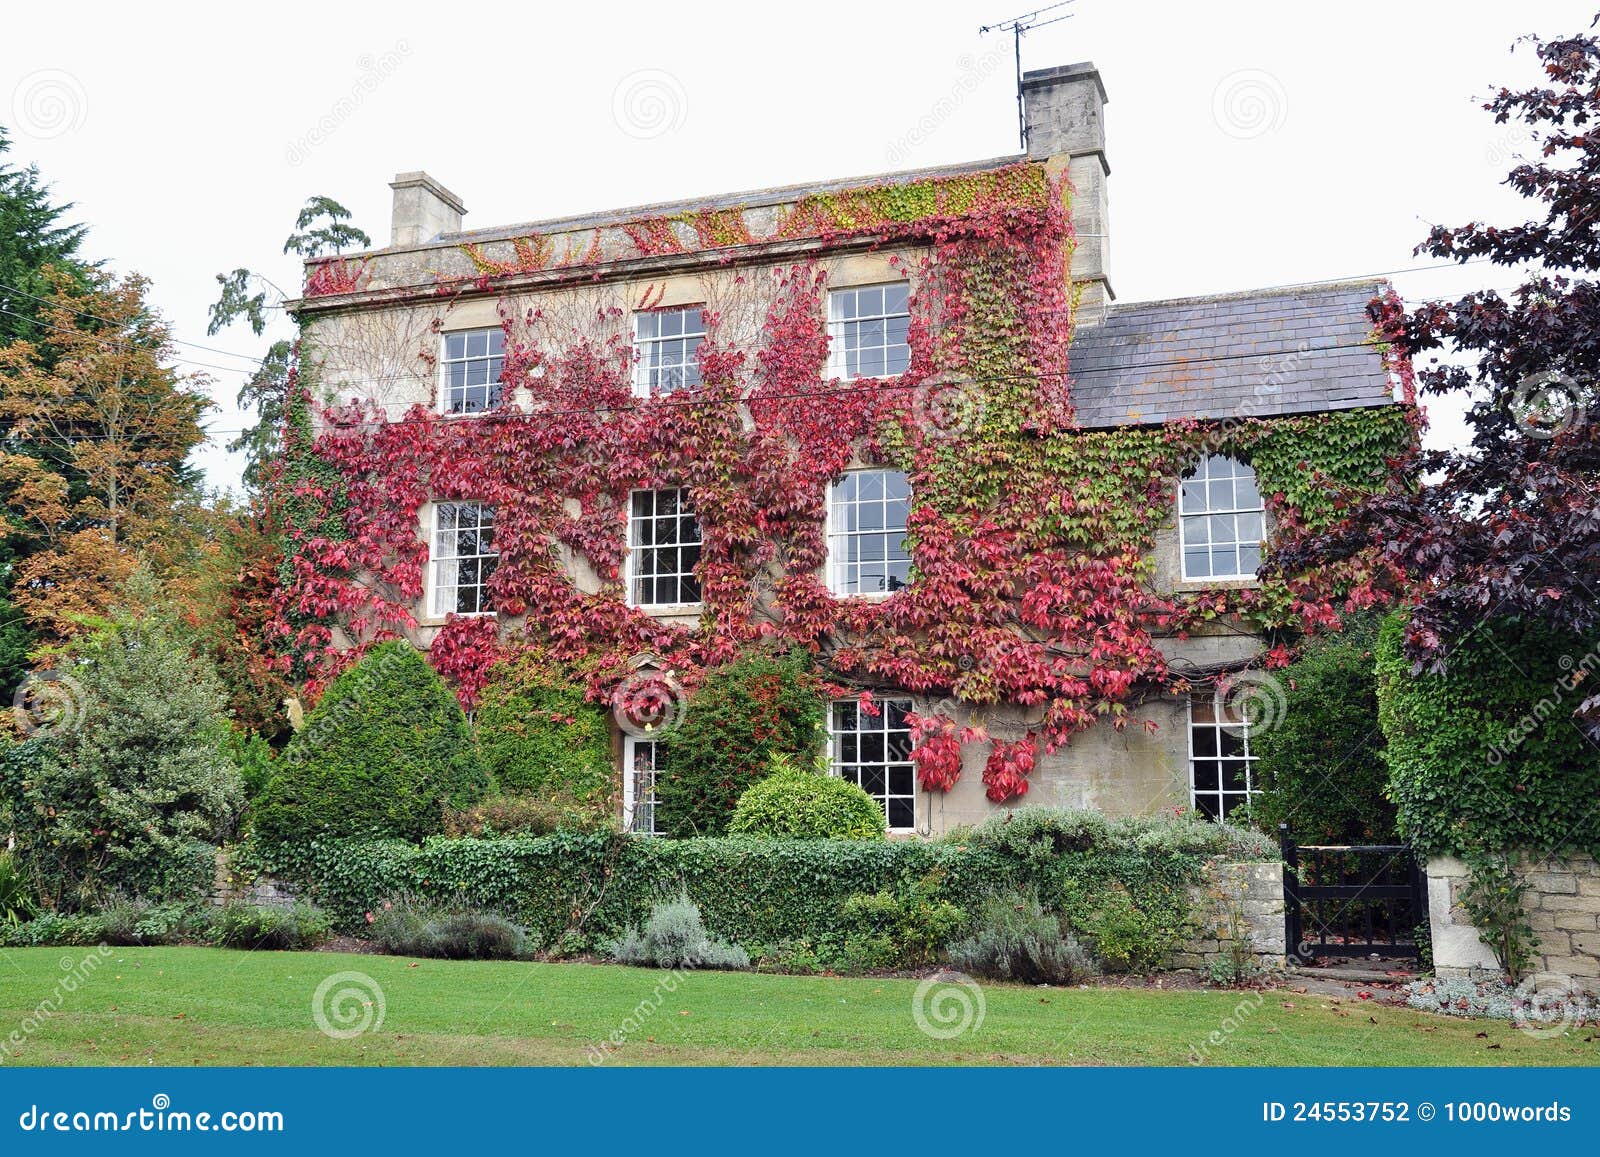 english manor house